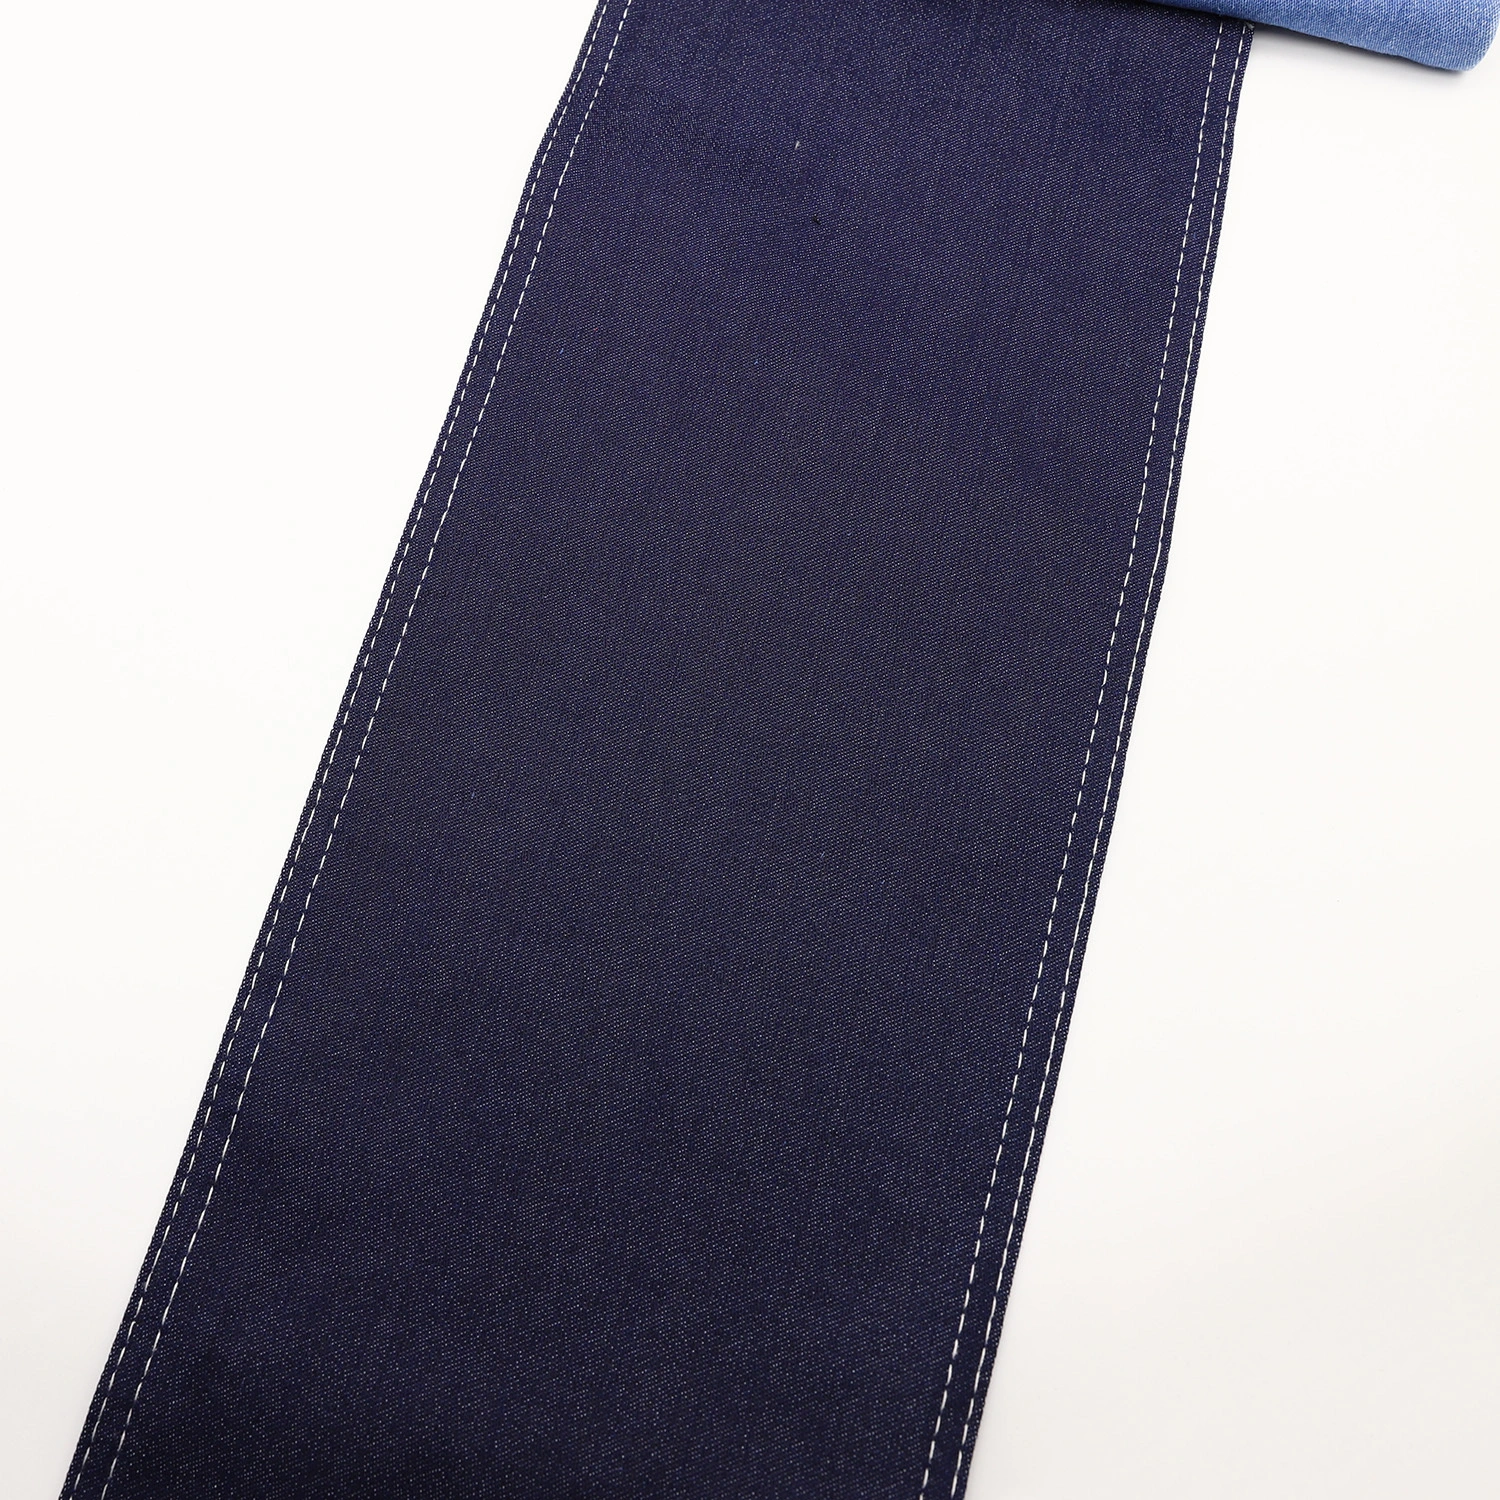 S200A-5   Satin denim fabric with stretch 77%Cotton 21.5%Poly 1.5%Spandex 12